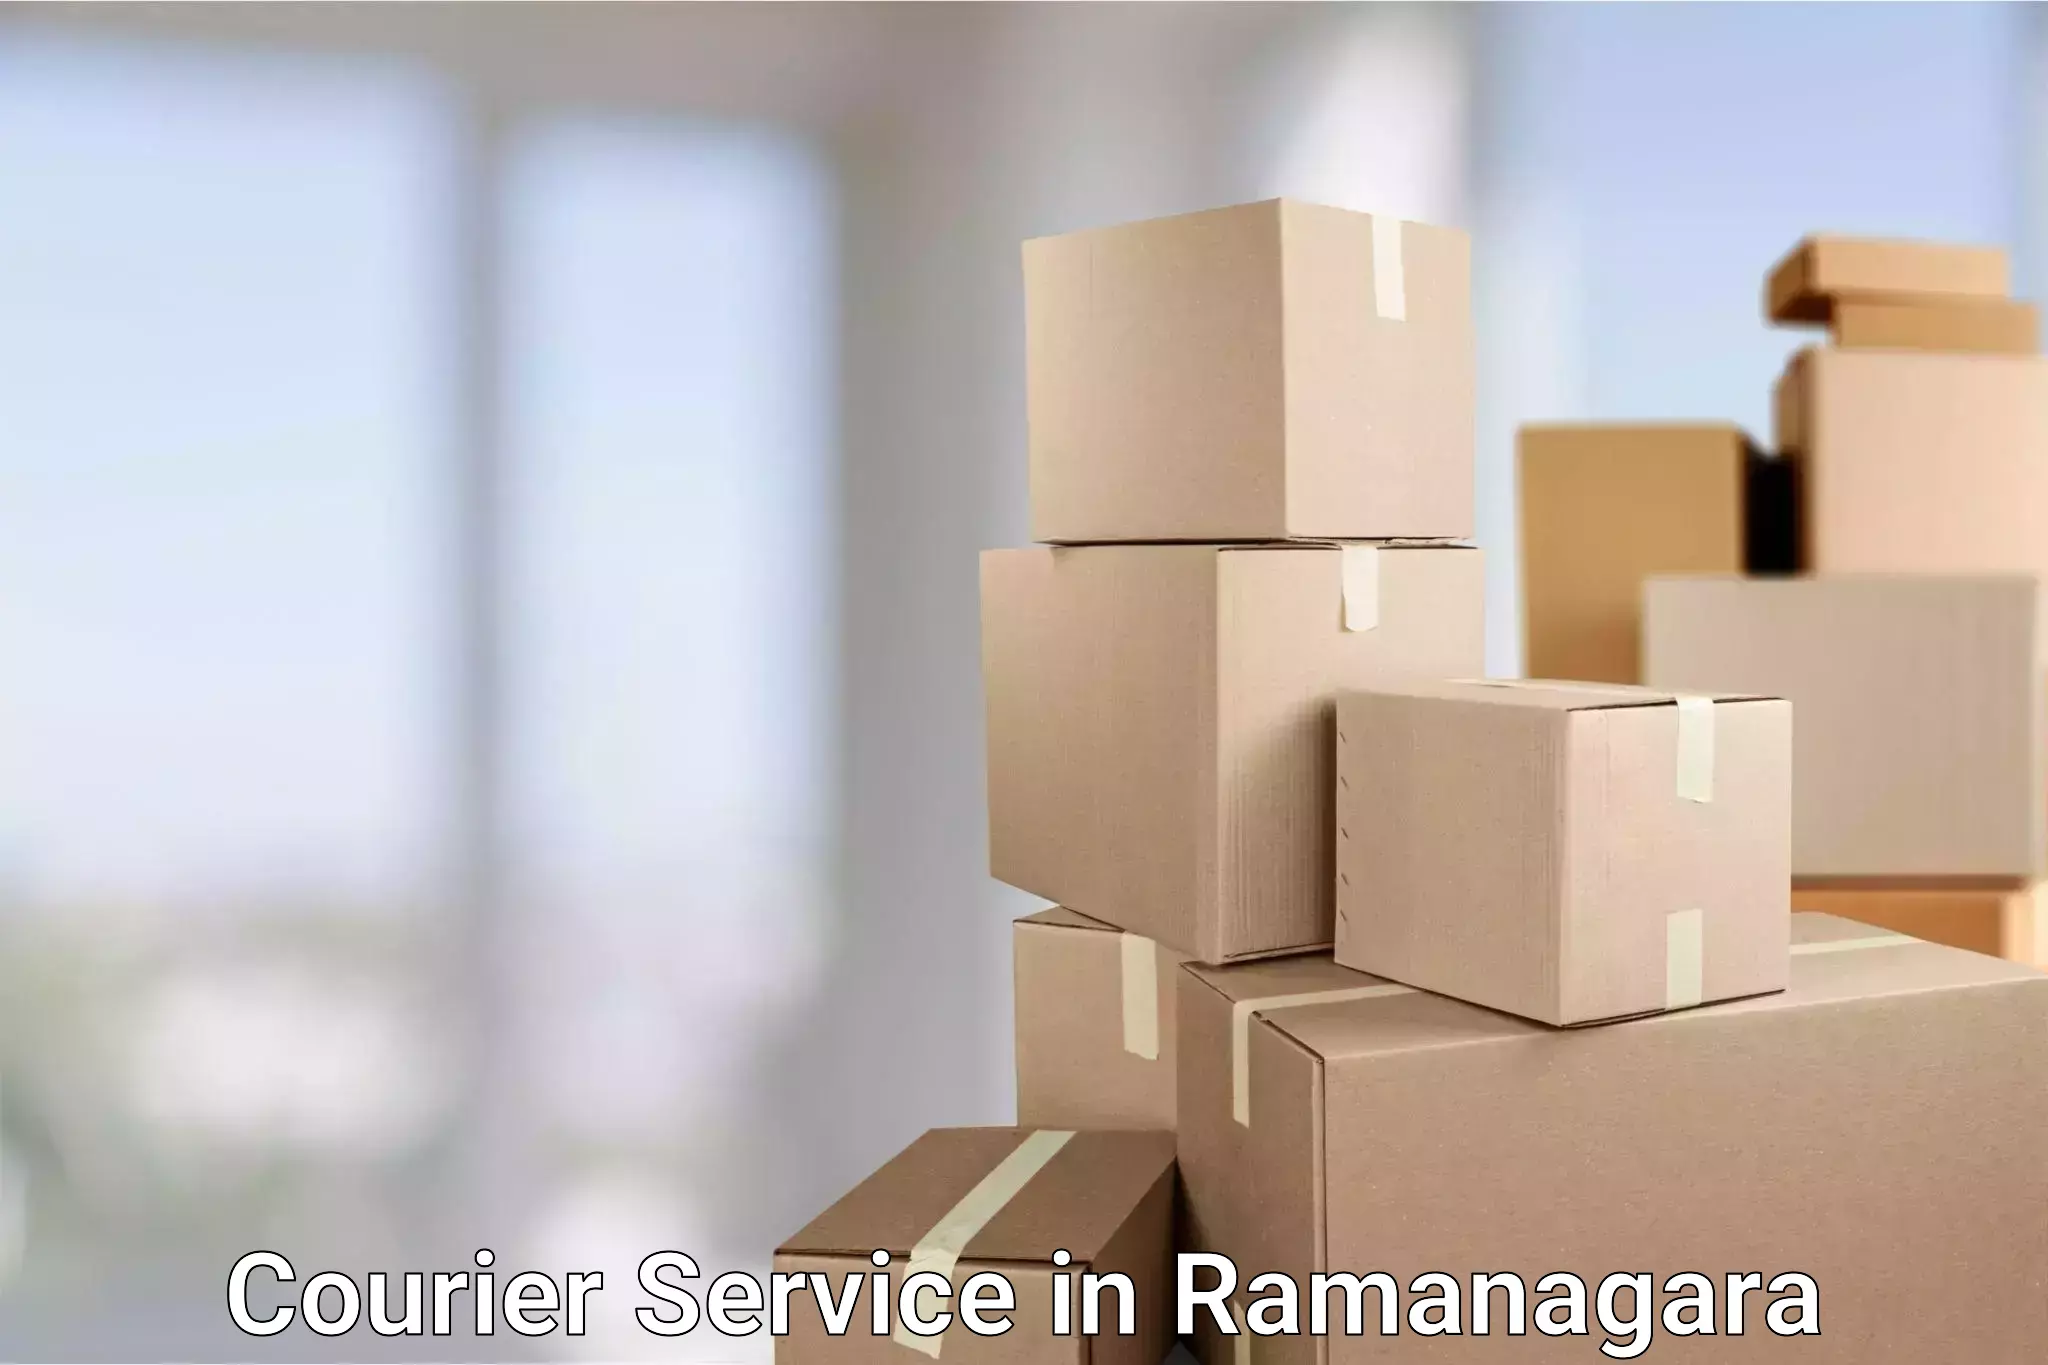 Bulk courier orders in Ramanagara